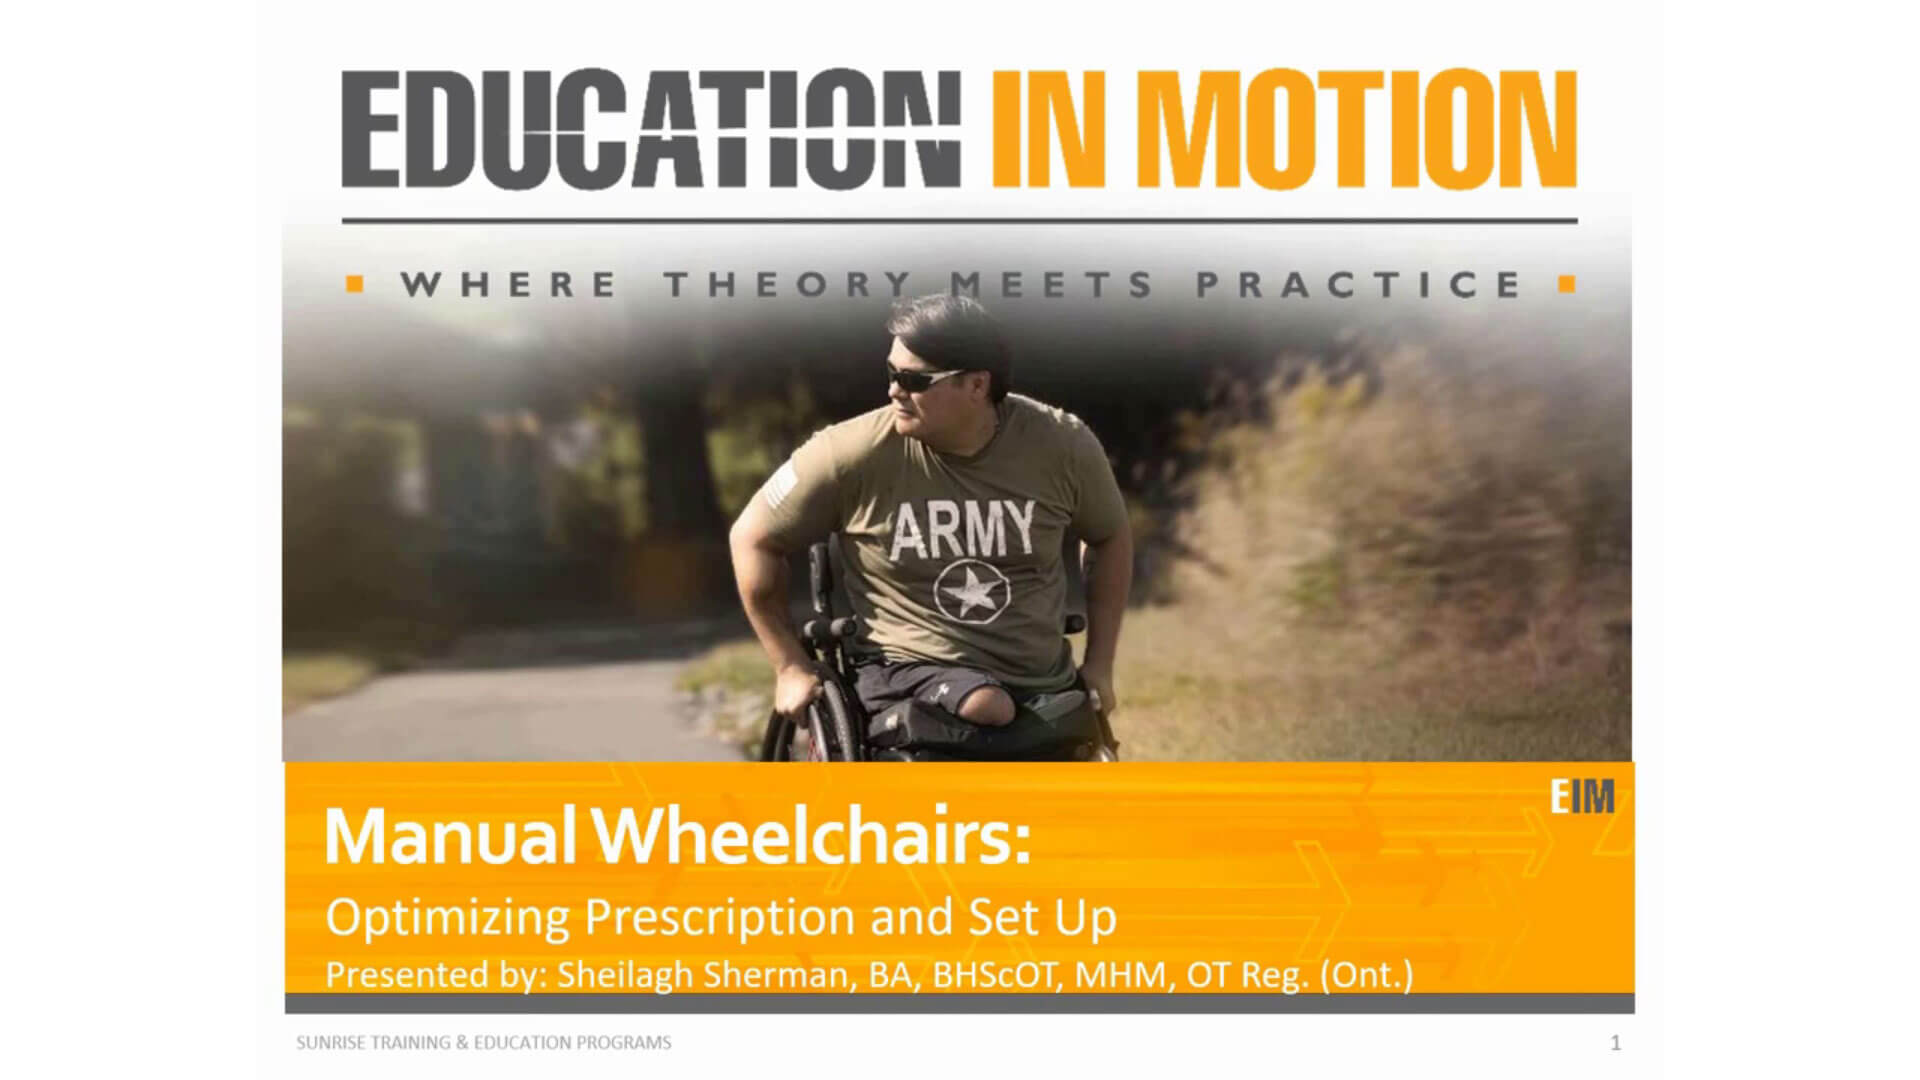 Manual Wheelchairs: Optimizing Prescription and Set Up